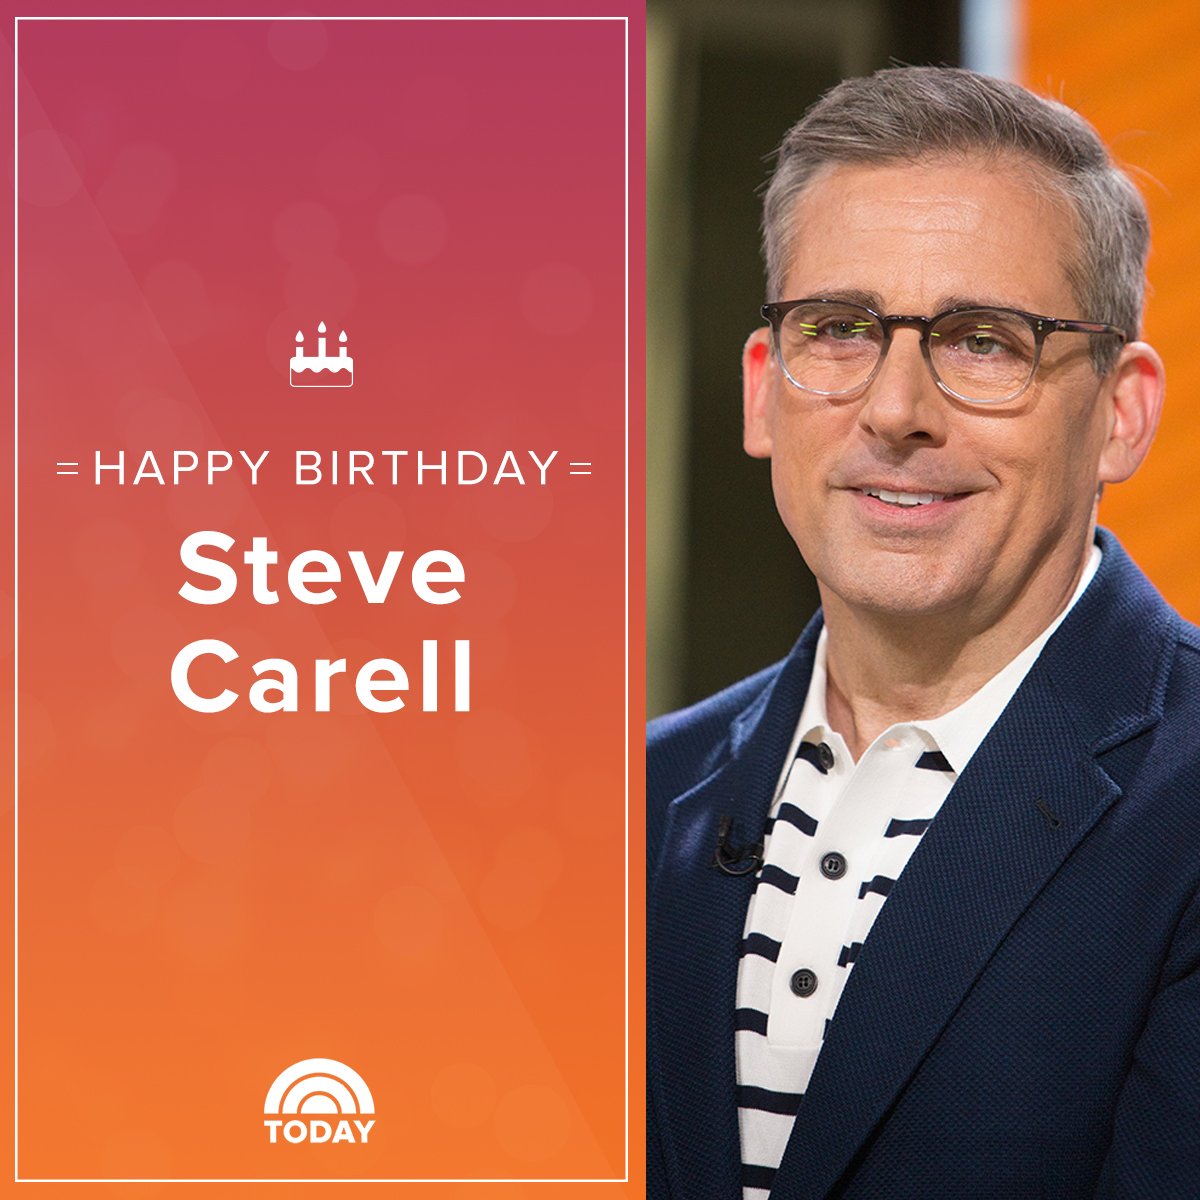 Happy 55th birthday, Steve Carell! 